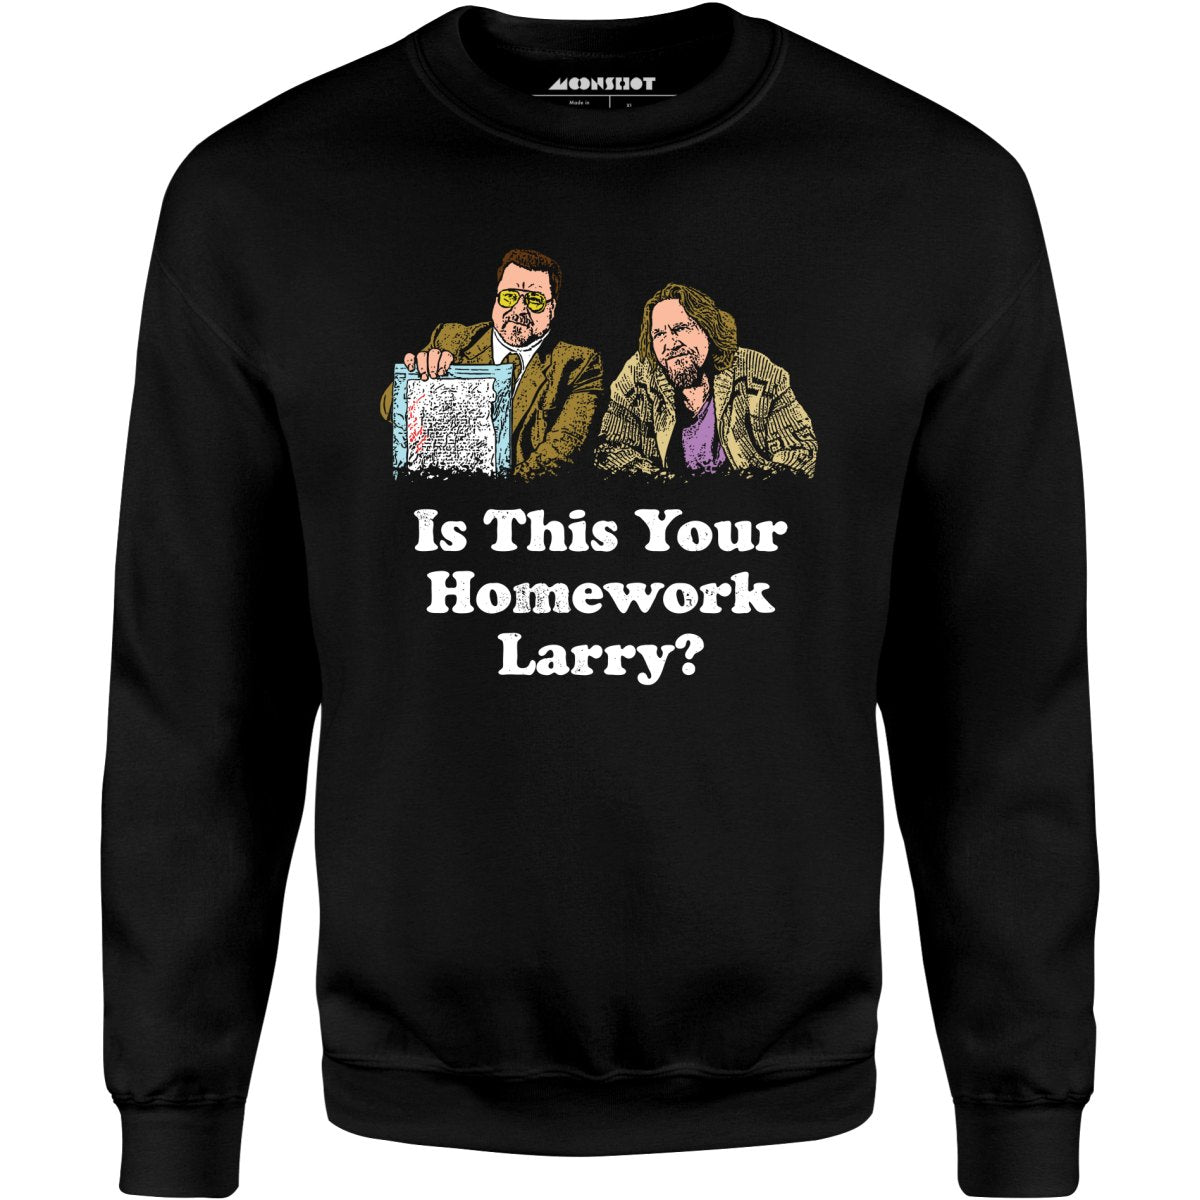 Is This Your Homework, Larry? - Unisex Sweatshirt